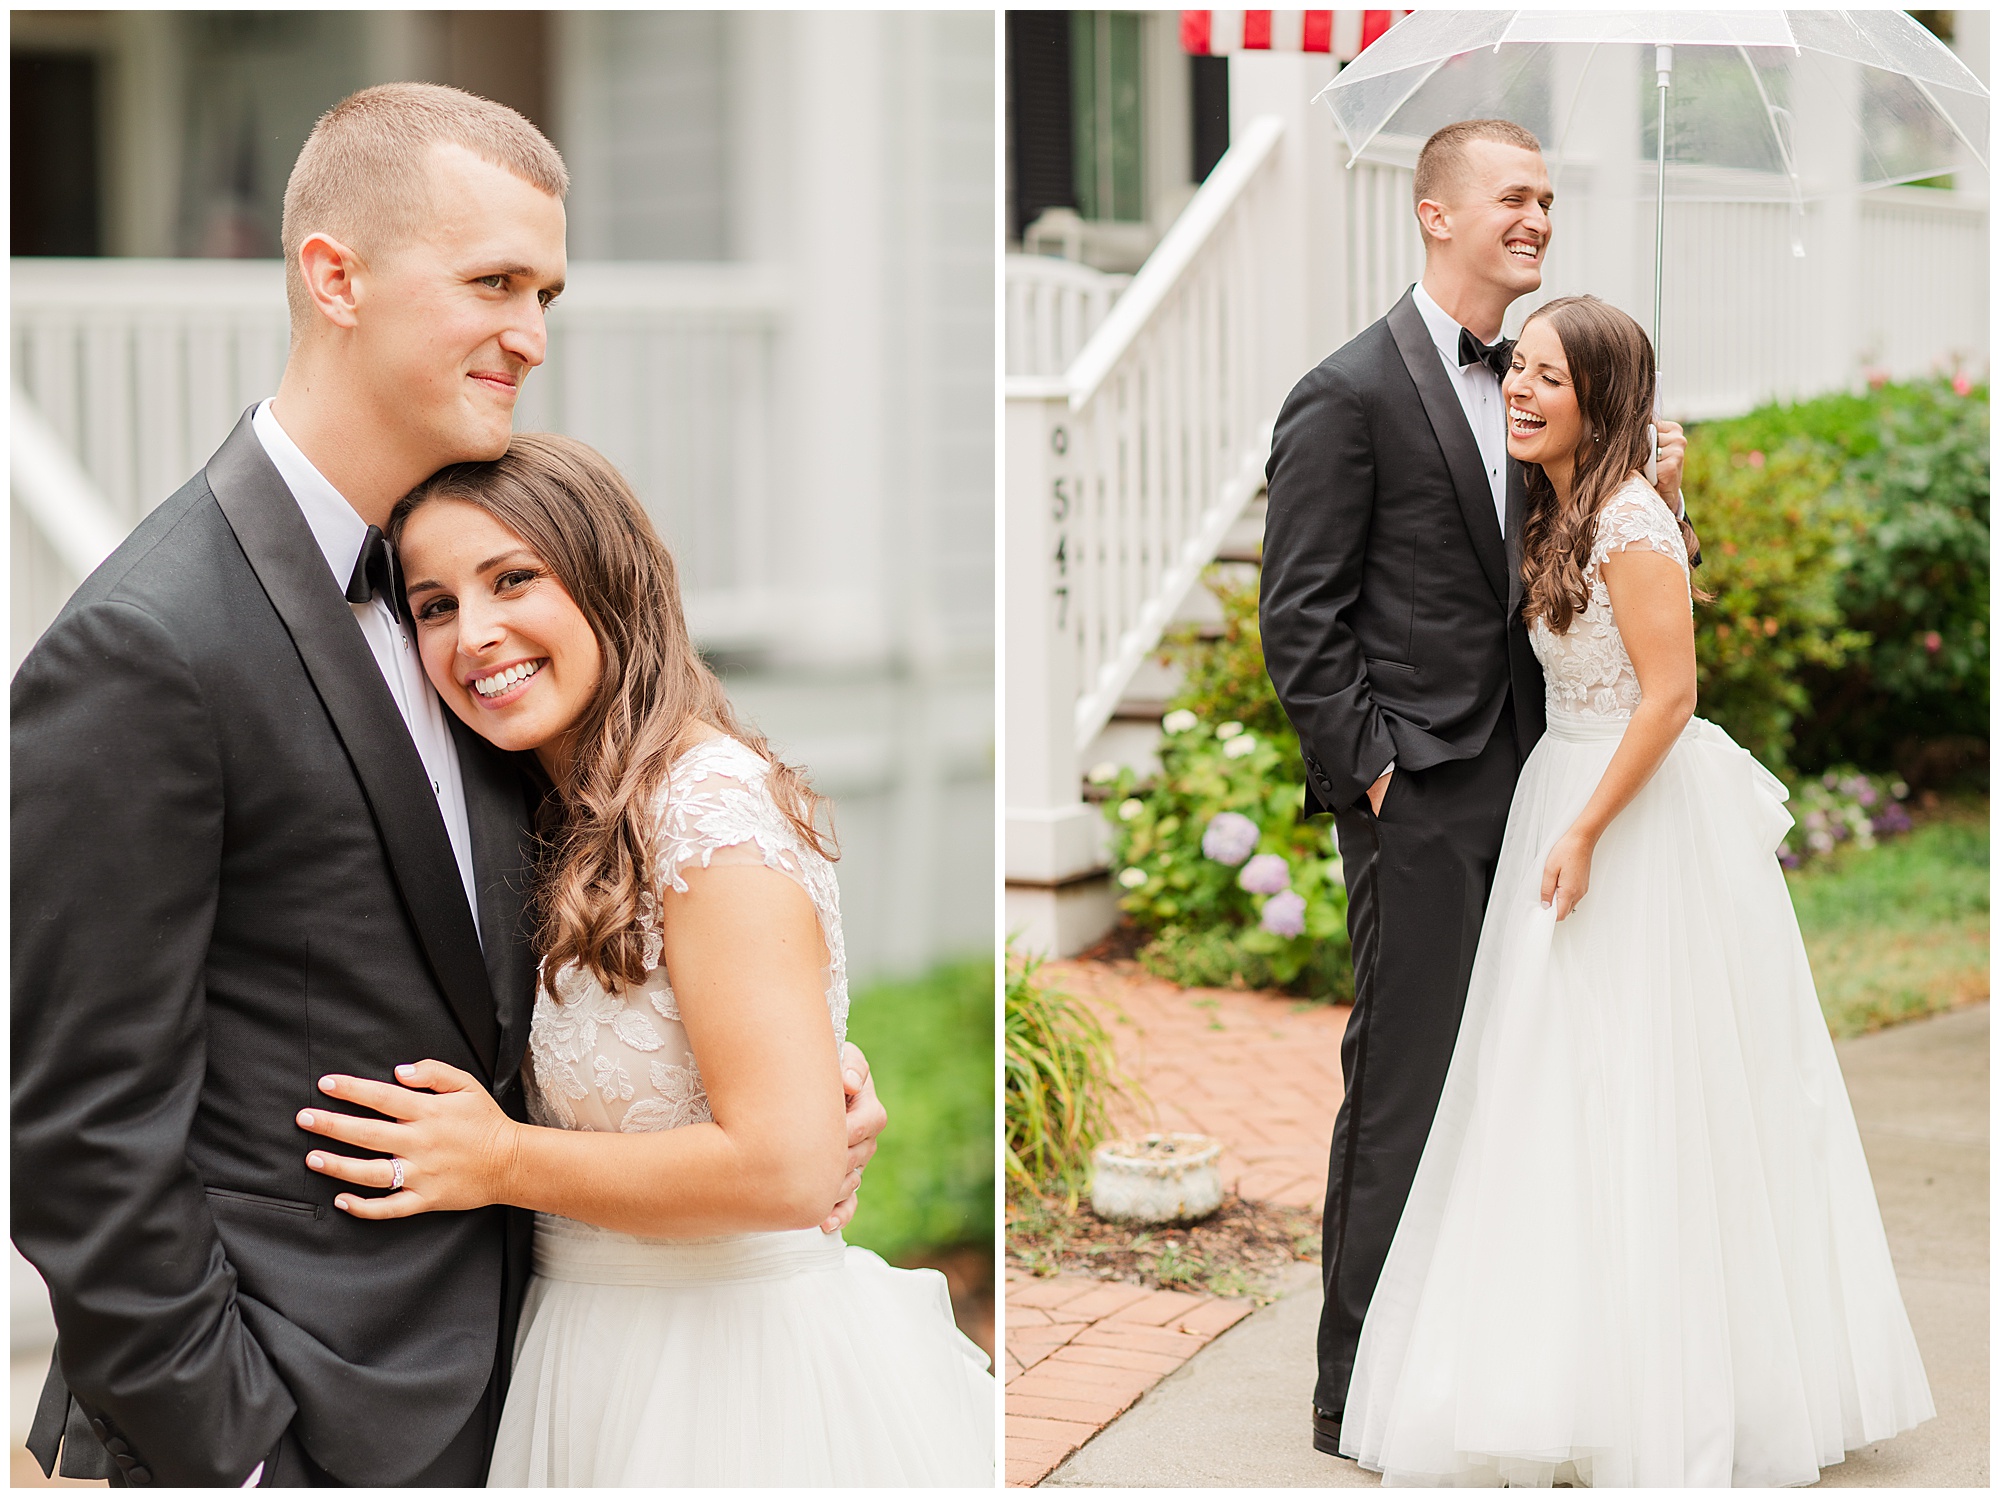 Danielle & Chris, East Beach wedding, Hampton Roads weddings, Kelley Stinson Photography, rainy wedding day